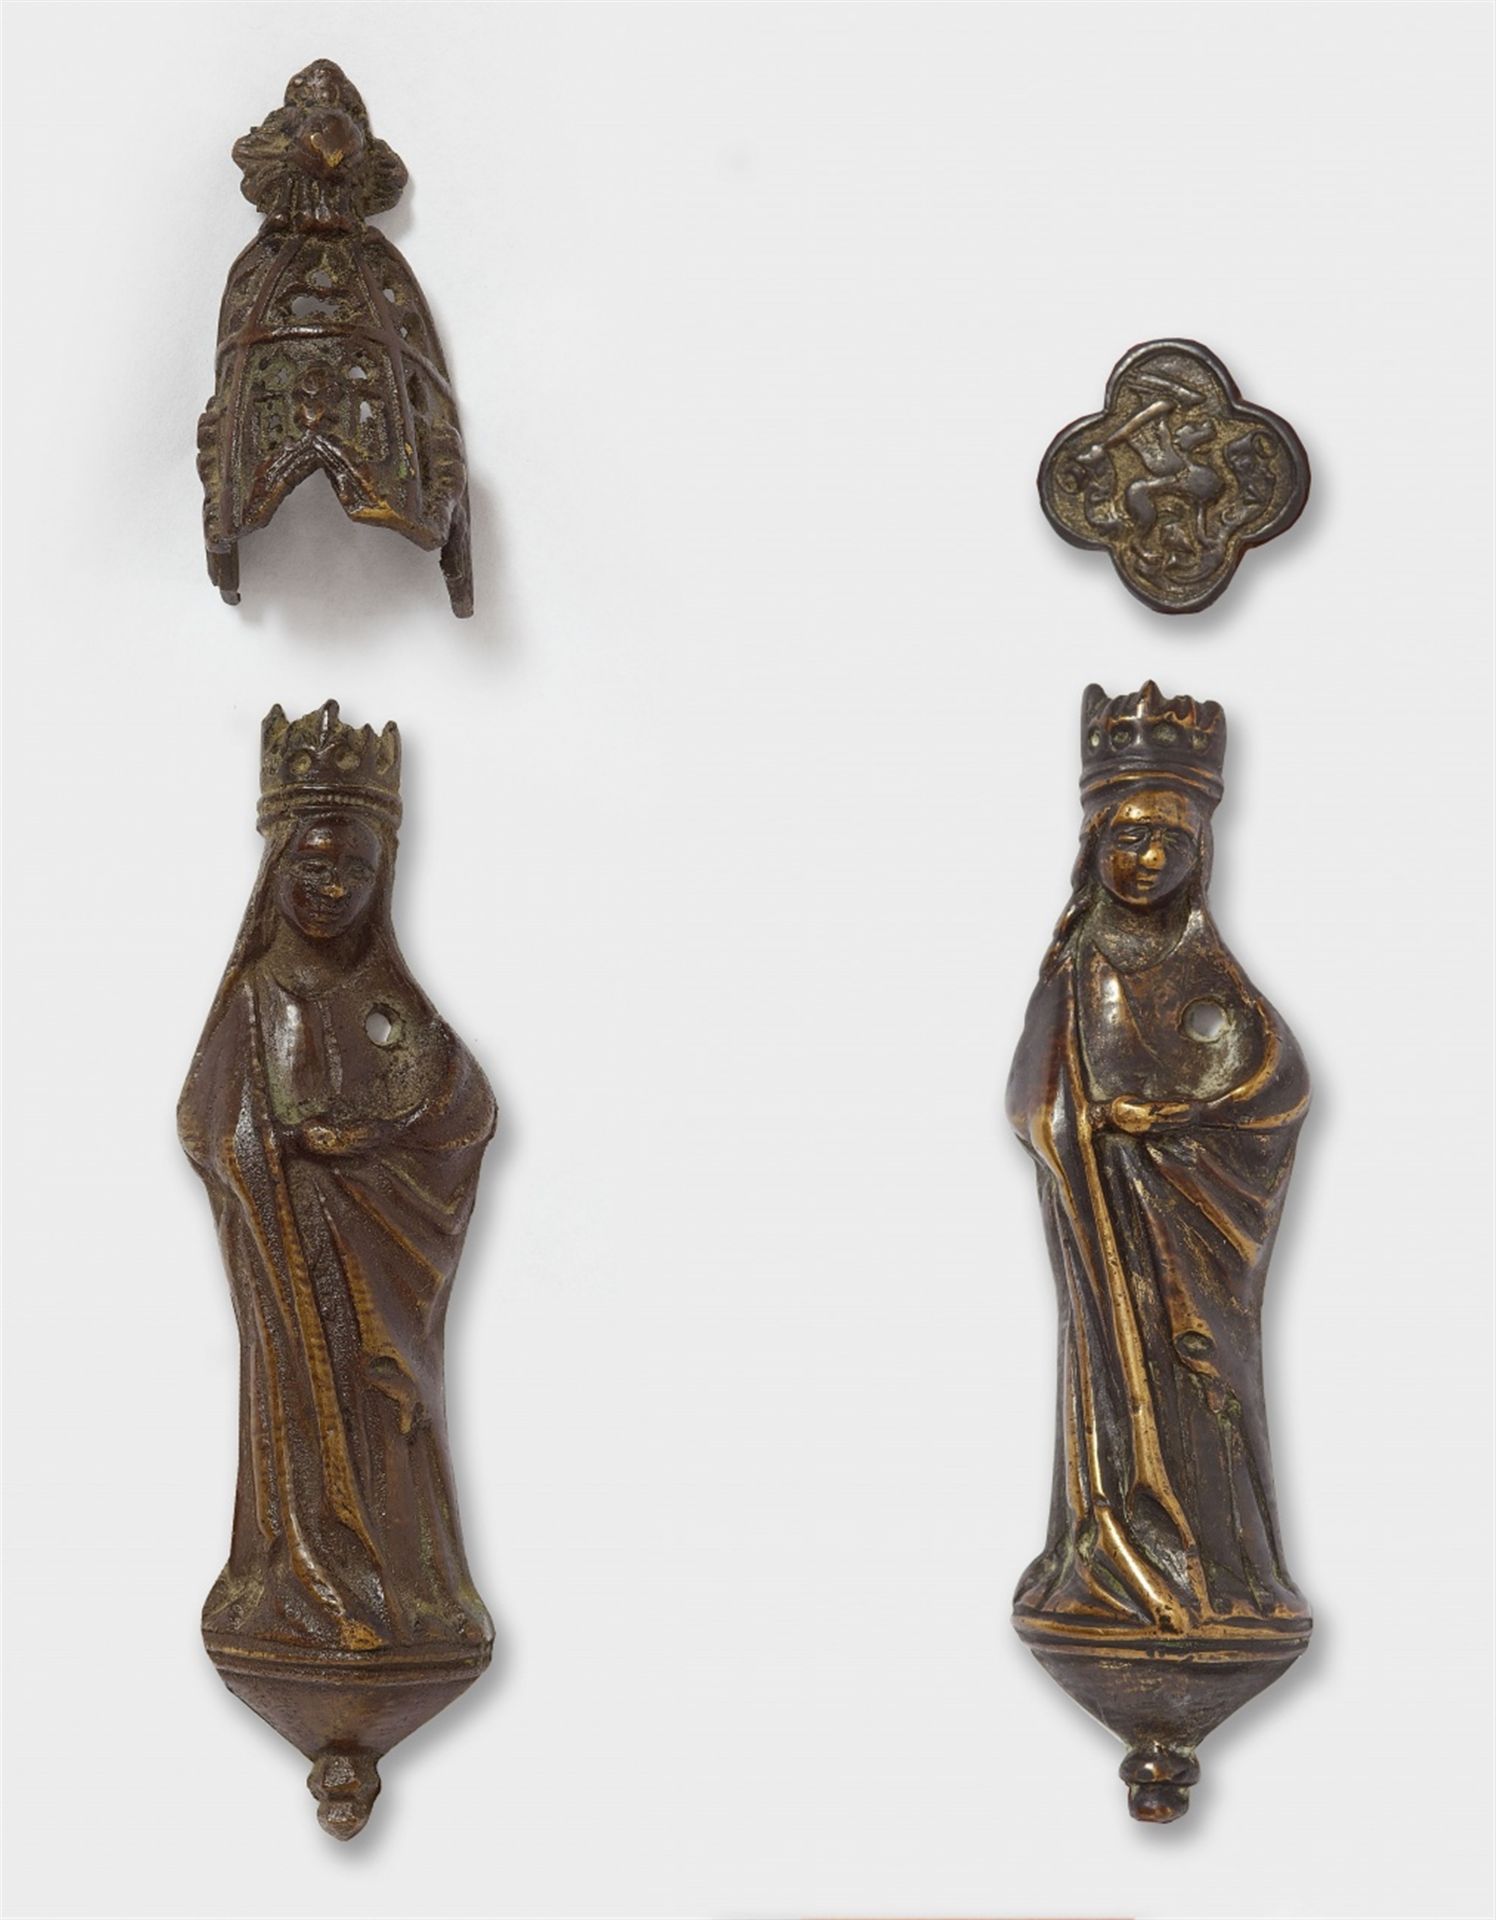 Two Flemish bronze figures of the Virgin, second half 15th century